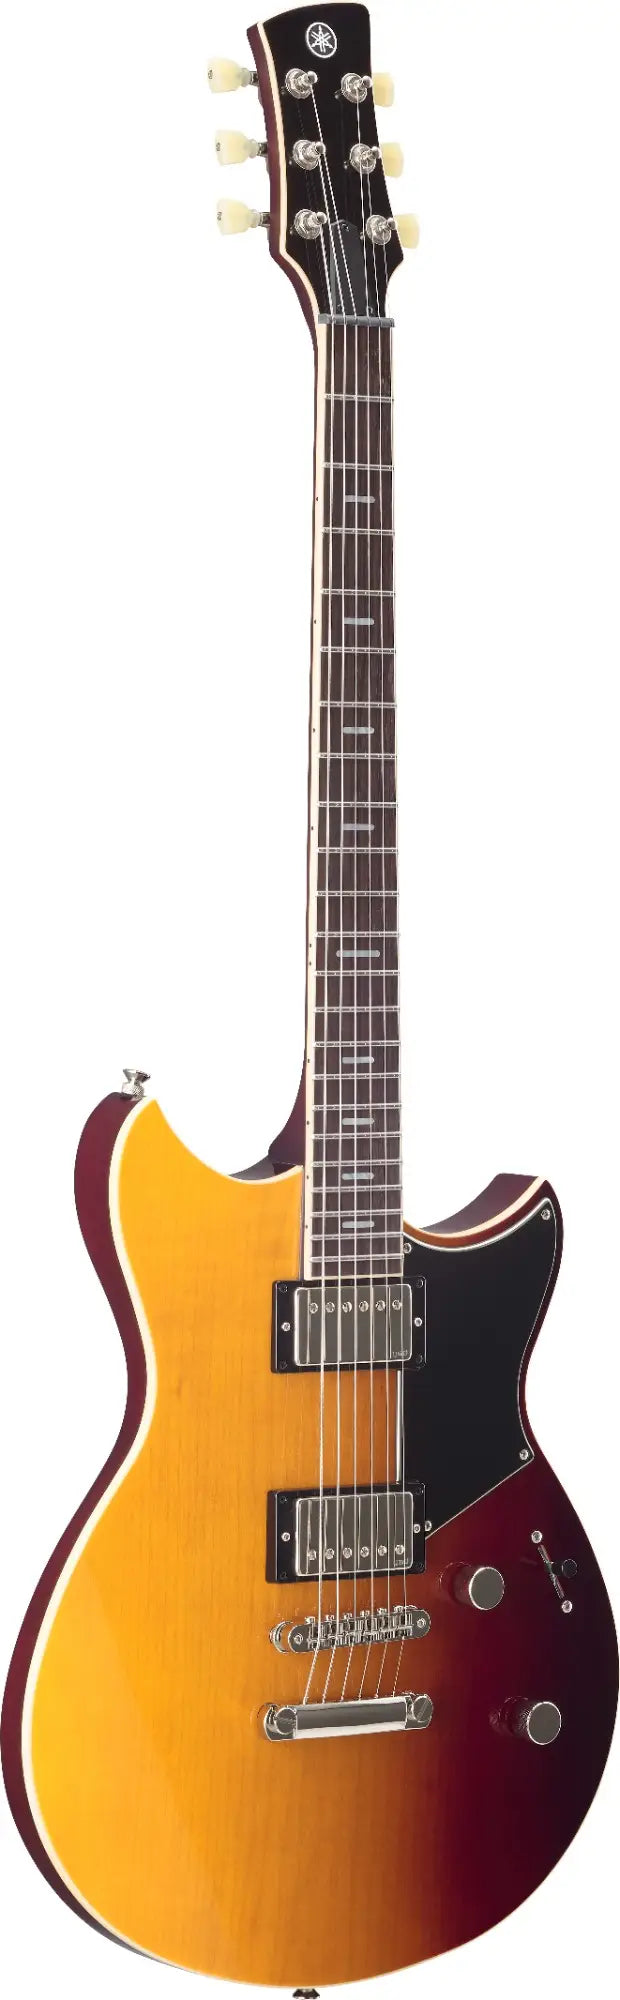 Yamaha Revstar Standard RSS20SSB Electric Guitar – Sunset Burst